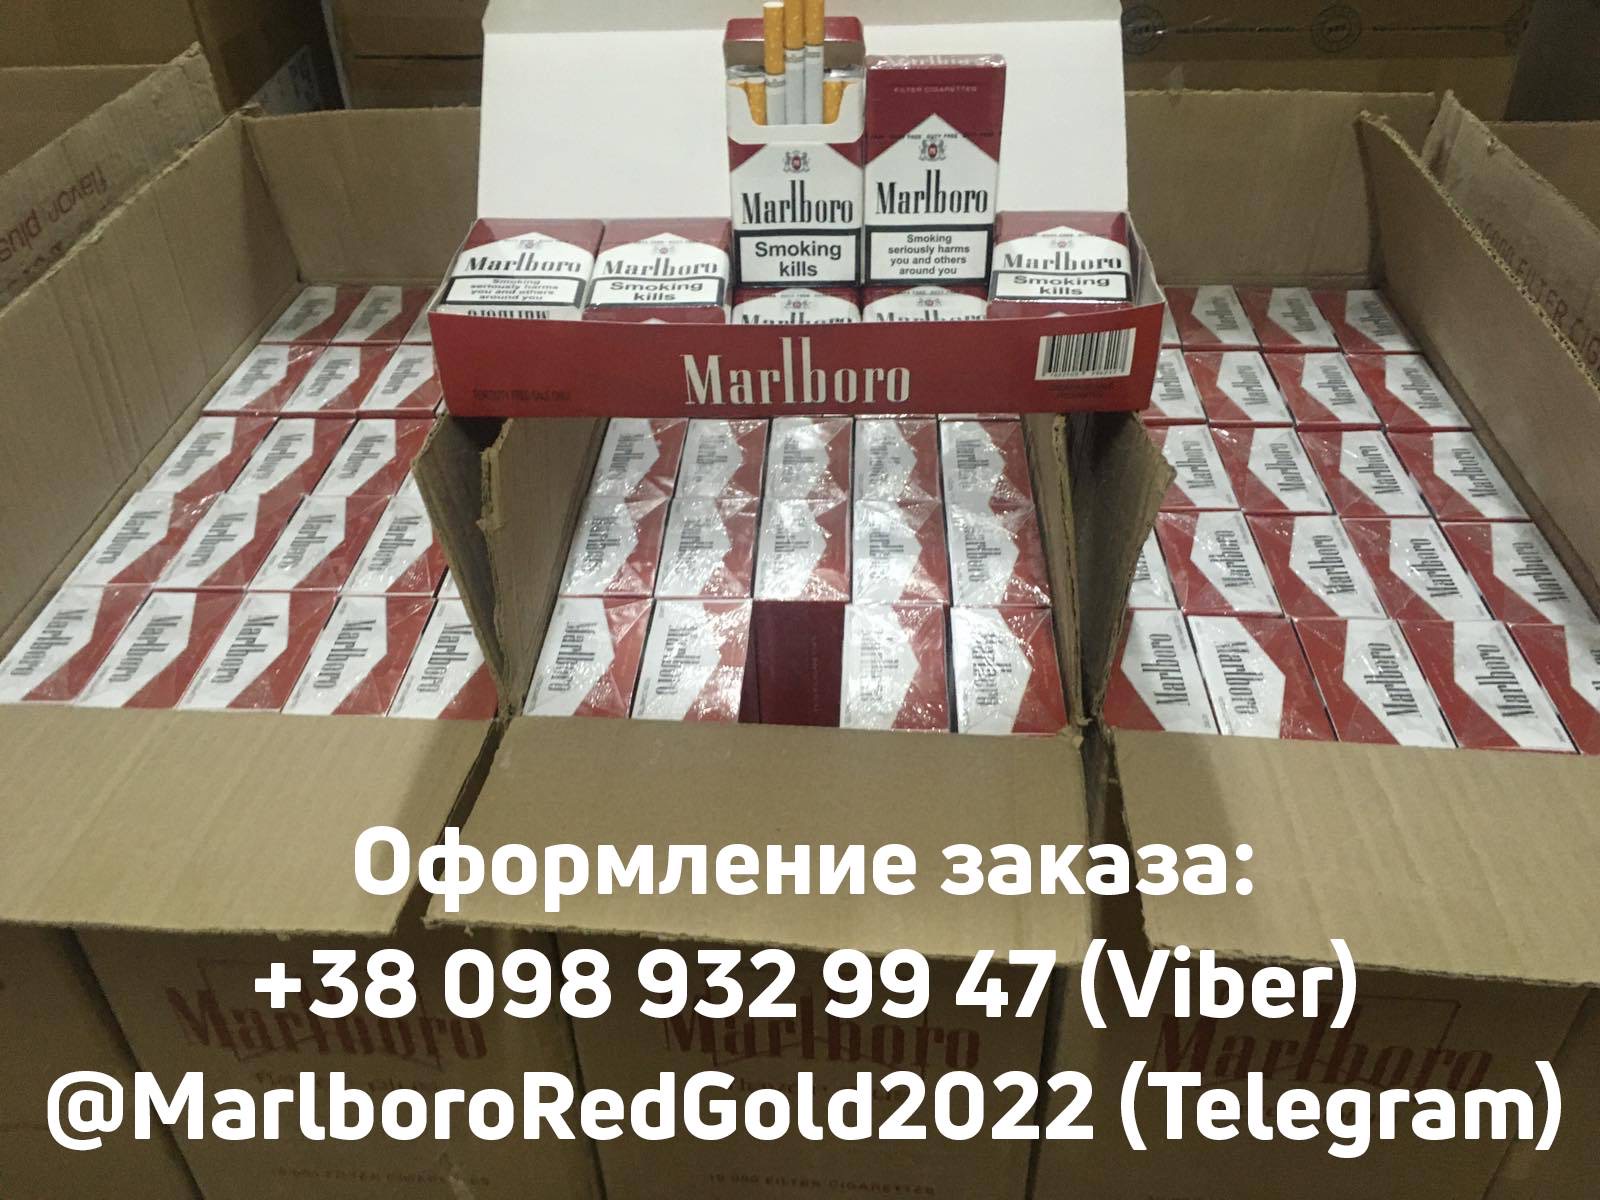 Продаю сигареты Marlboro, Marble - поблочно  - фотография